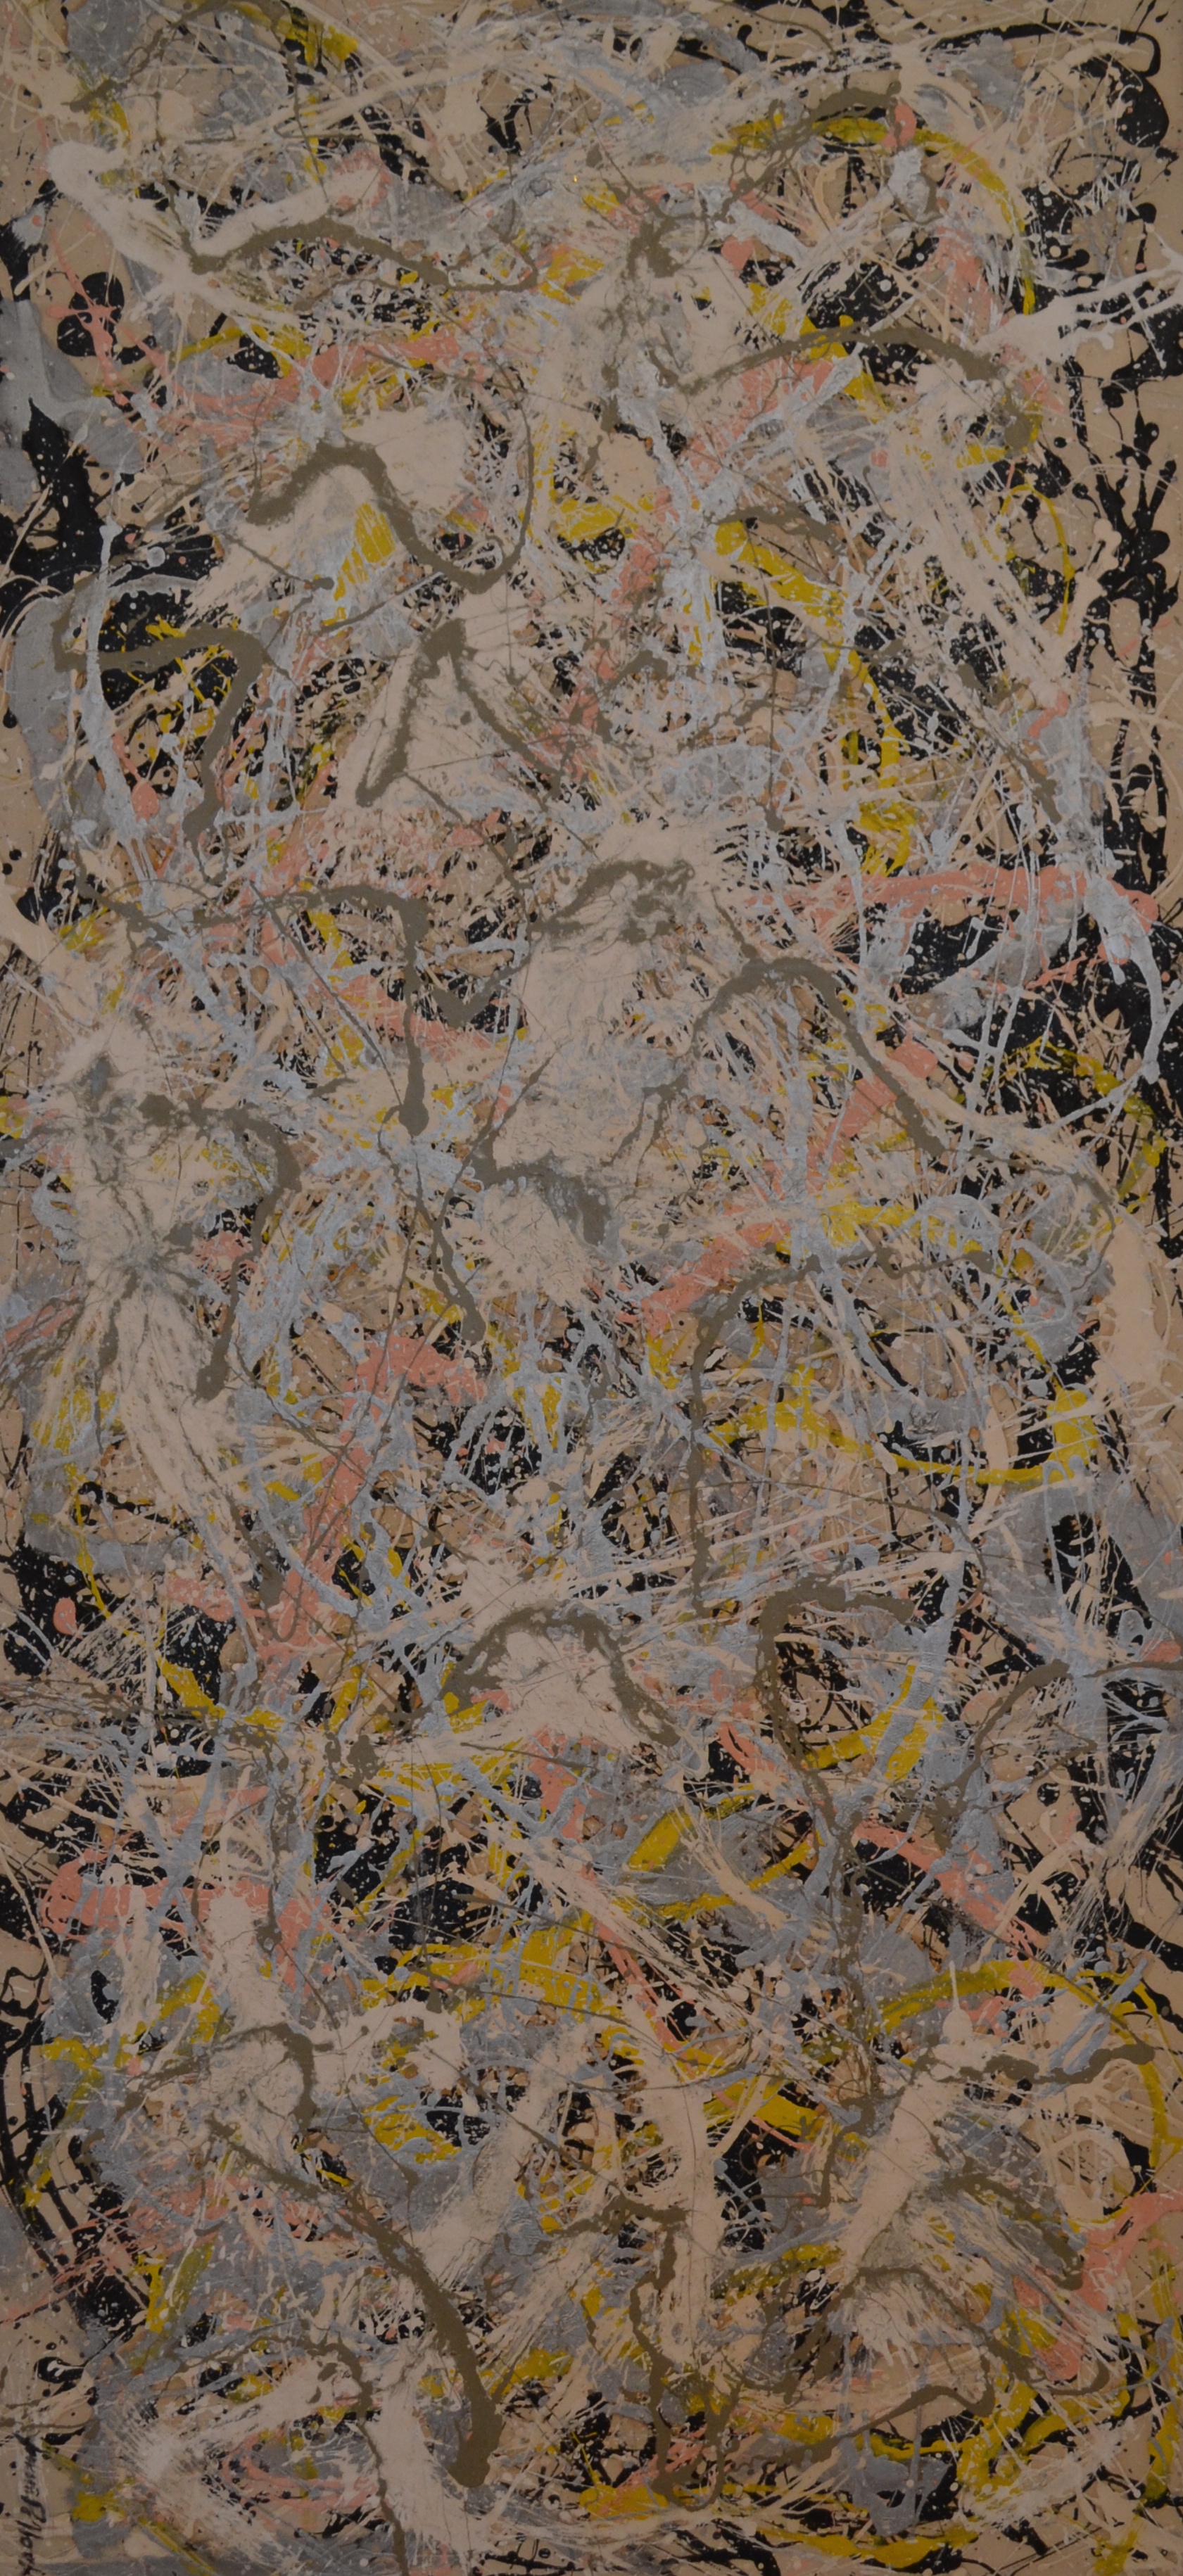 Jackson Pollock, Number 27, 1950